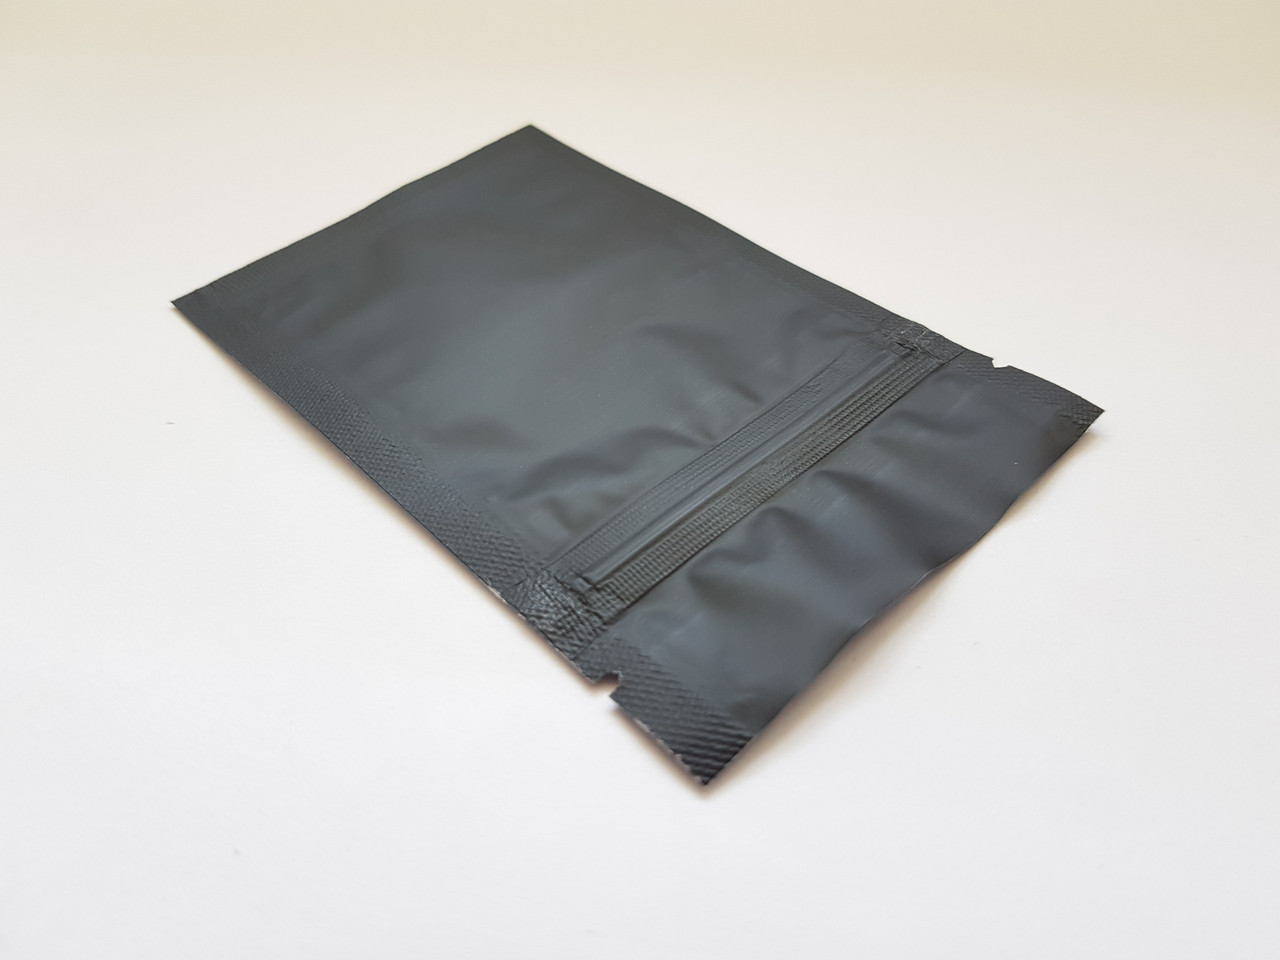 Пакет Саше 70х110 чёрный zip-замок: продажа, цена в е. Пакеты от .